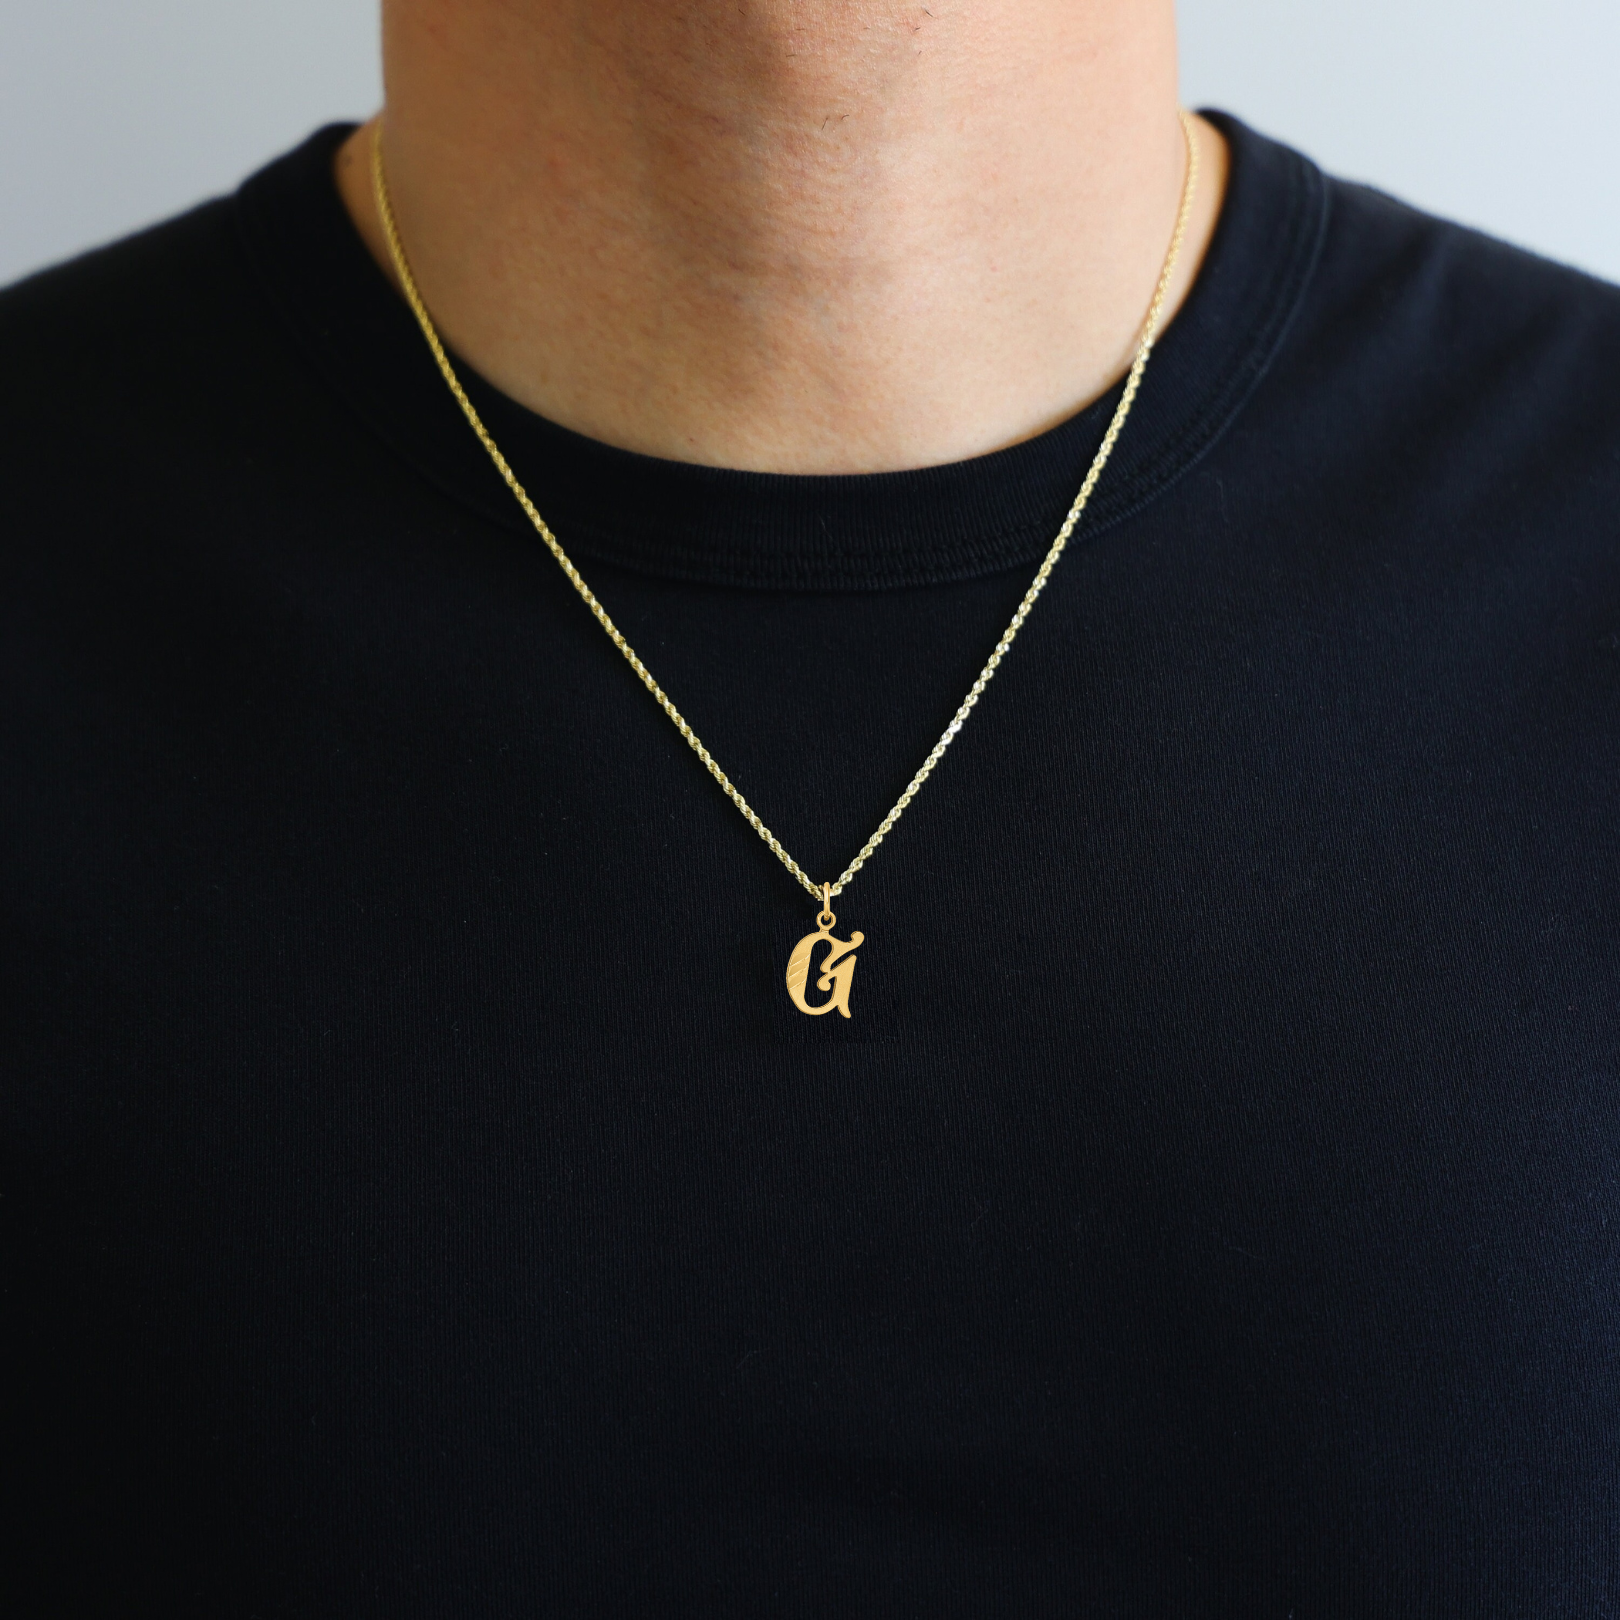 Gold Elegant Letter 'G' Charm  Model-C4833 - Charlie & Co. Jewelry